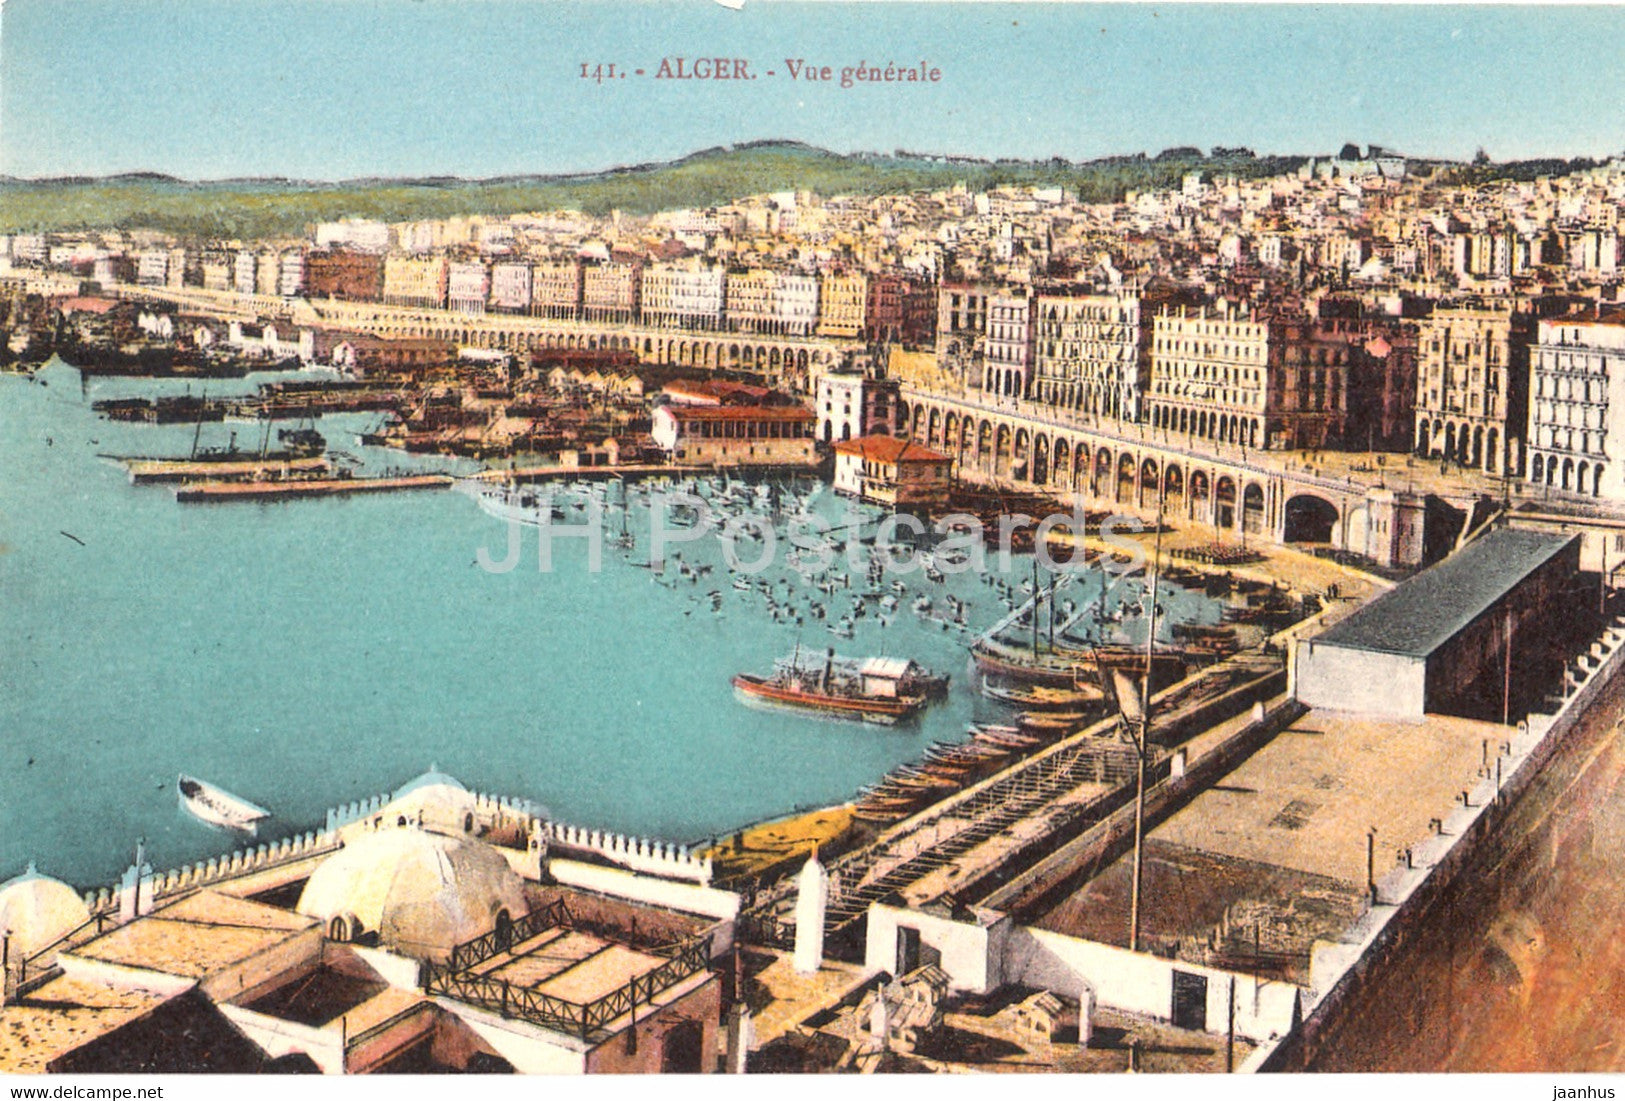 Alger - Algiers - Vue Generale - 141 - old postcard - Algeria - unused - JH Postcards